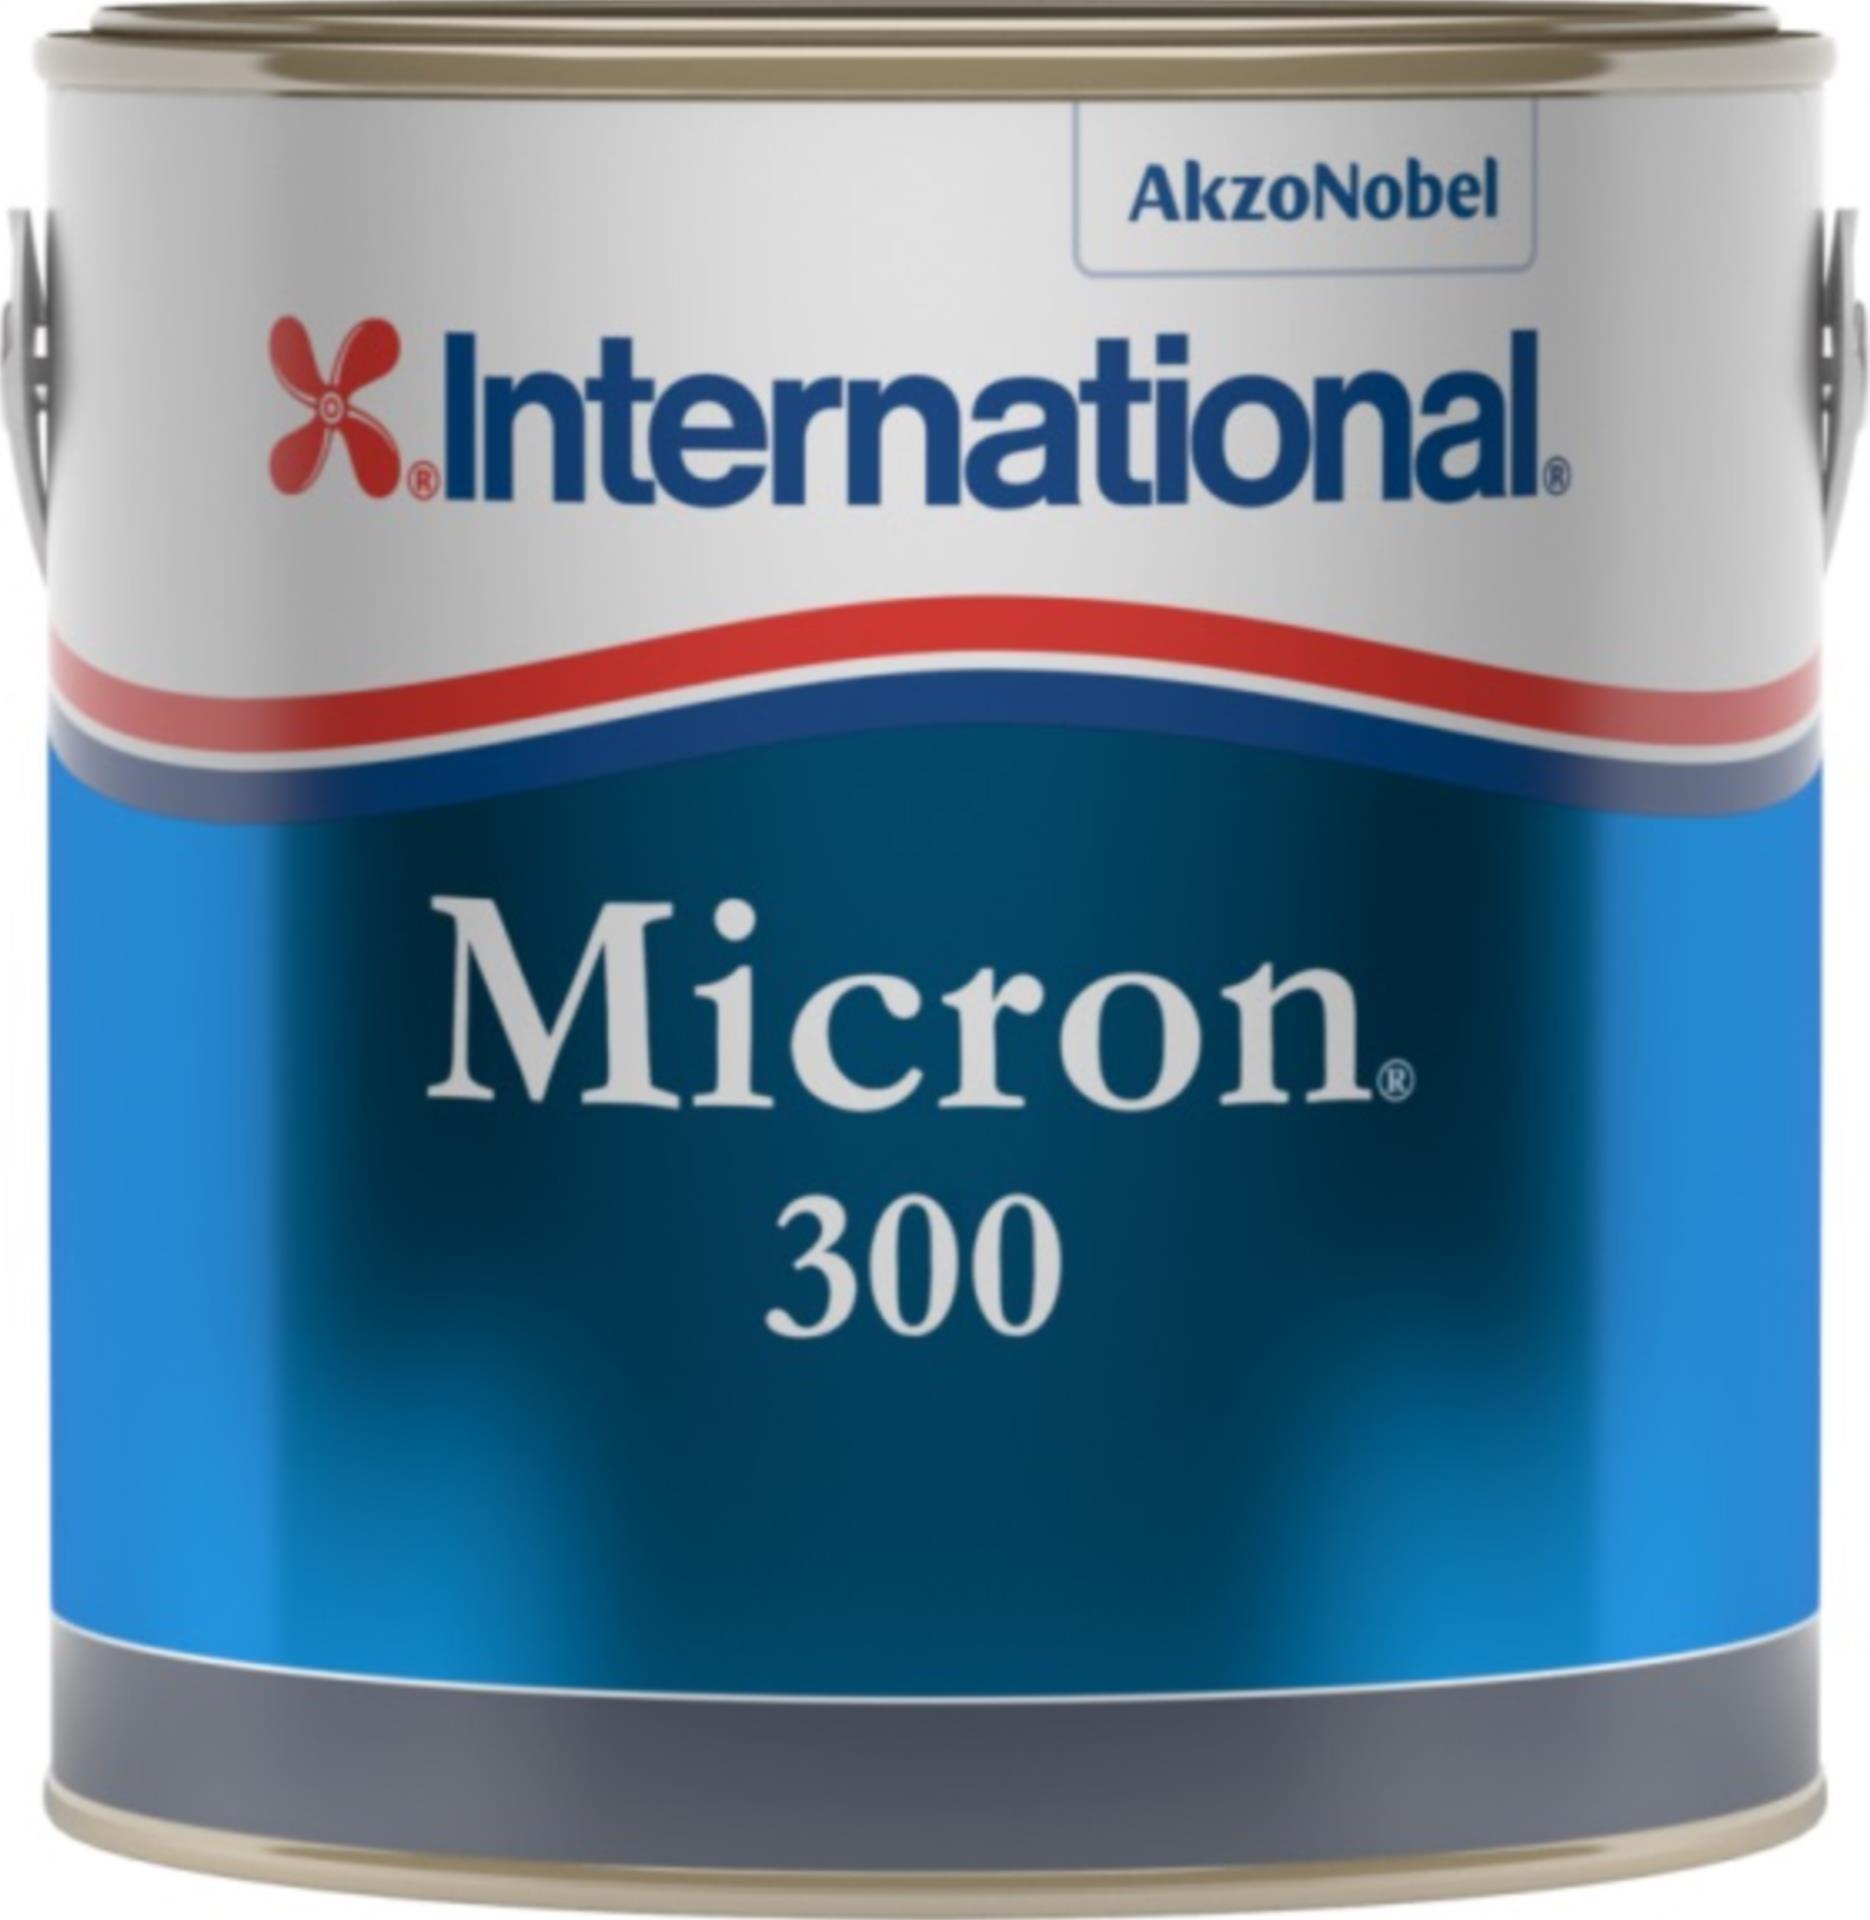 International Micron 300 dunkelgrau, 2,5 Liter